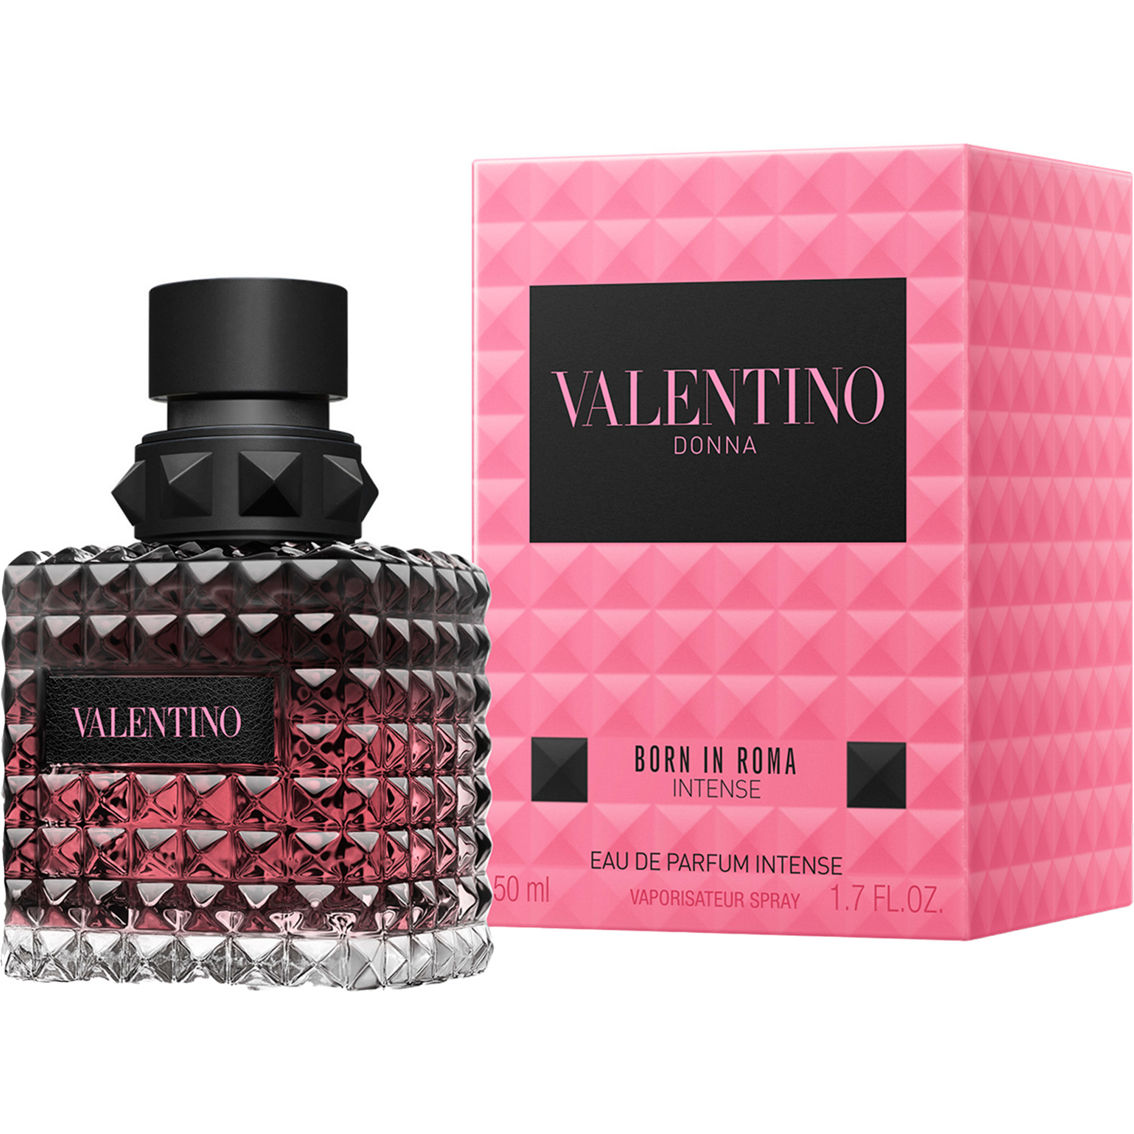 Valentino Donna Born In Roma Intense Eau de Parfum Spray - Image 2 of 8